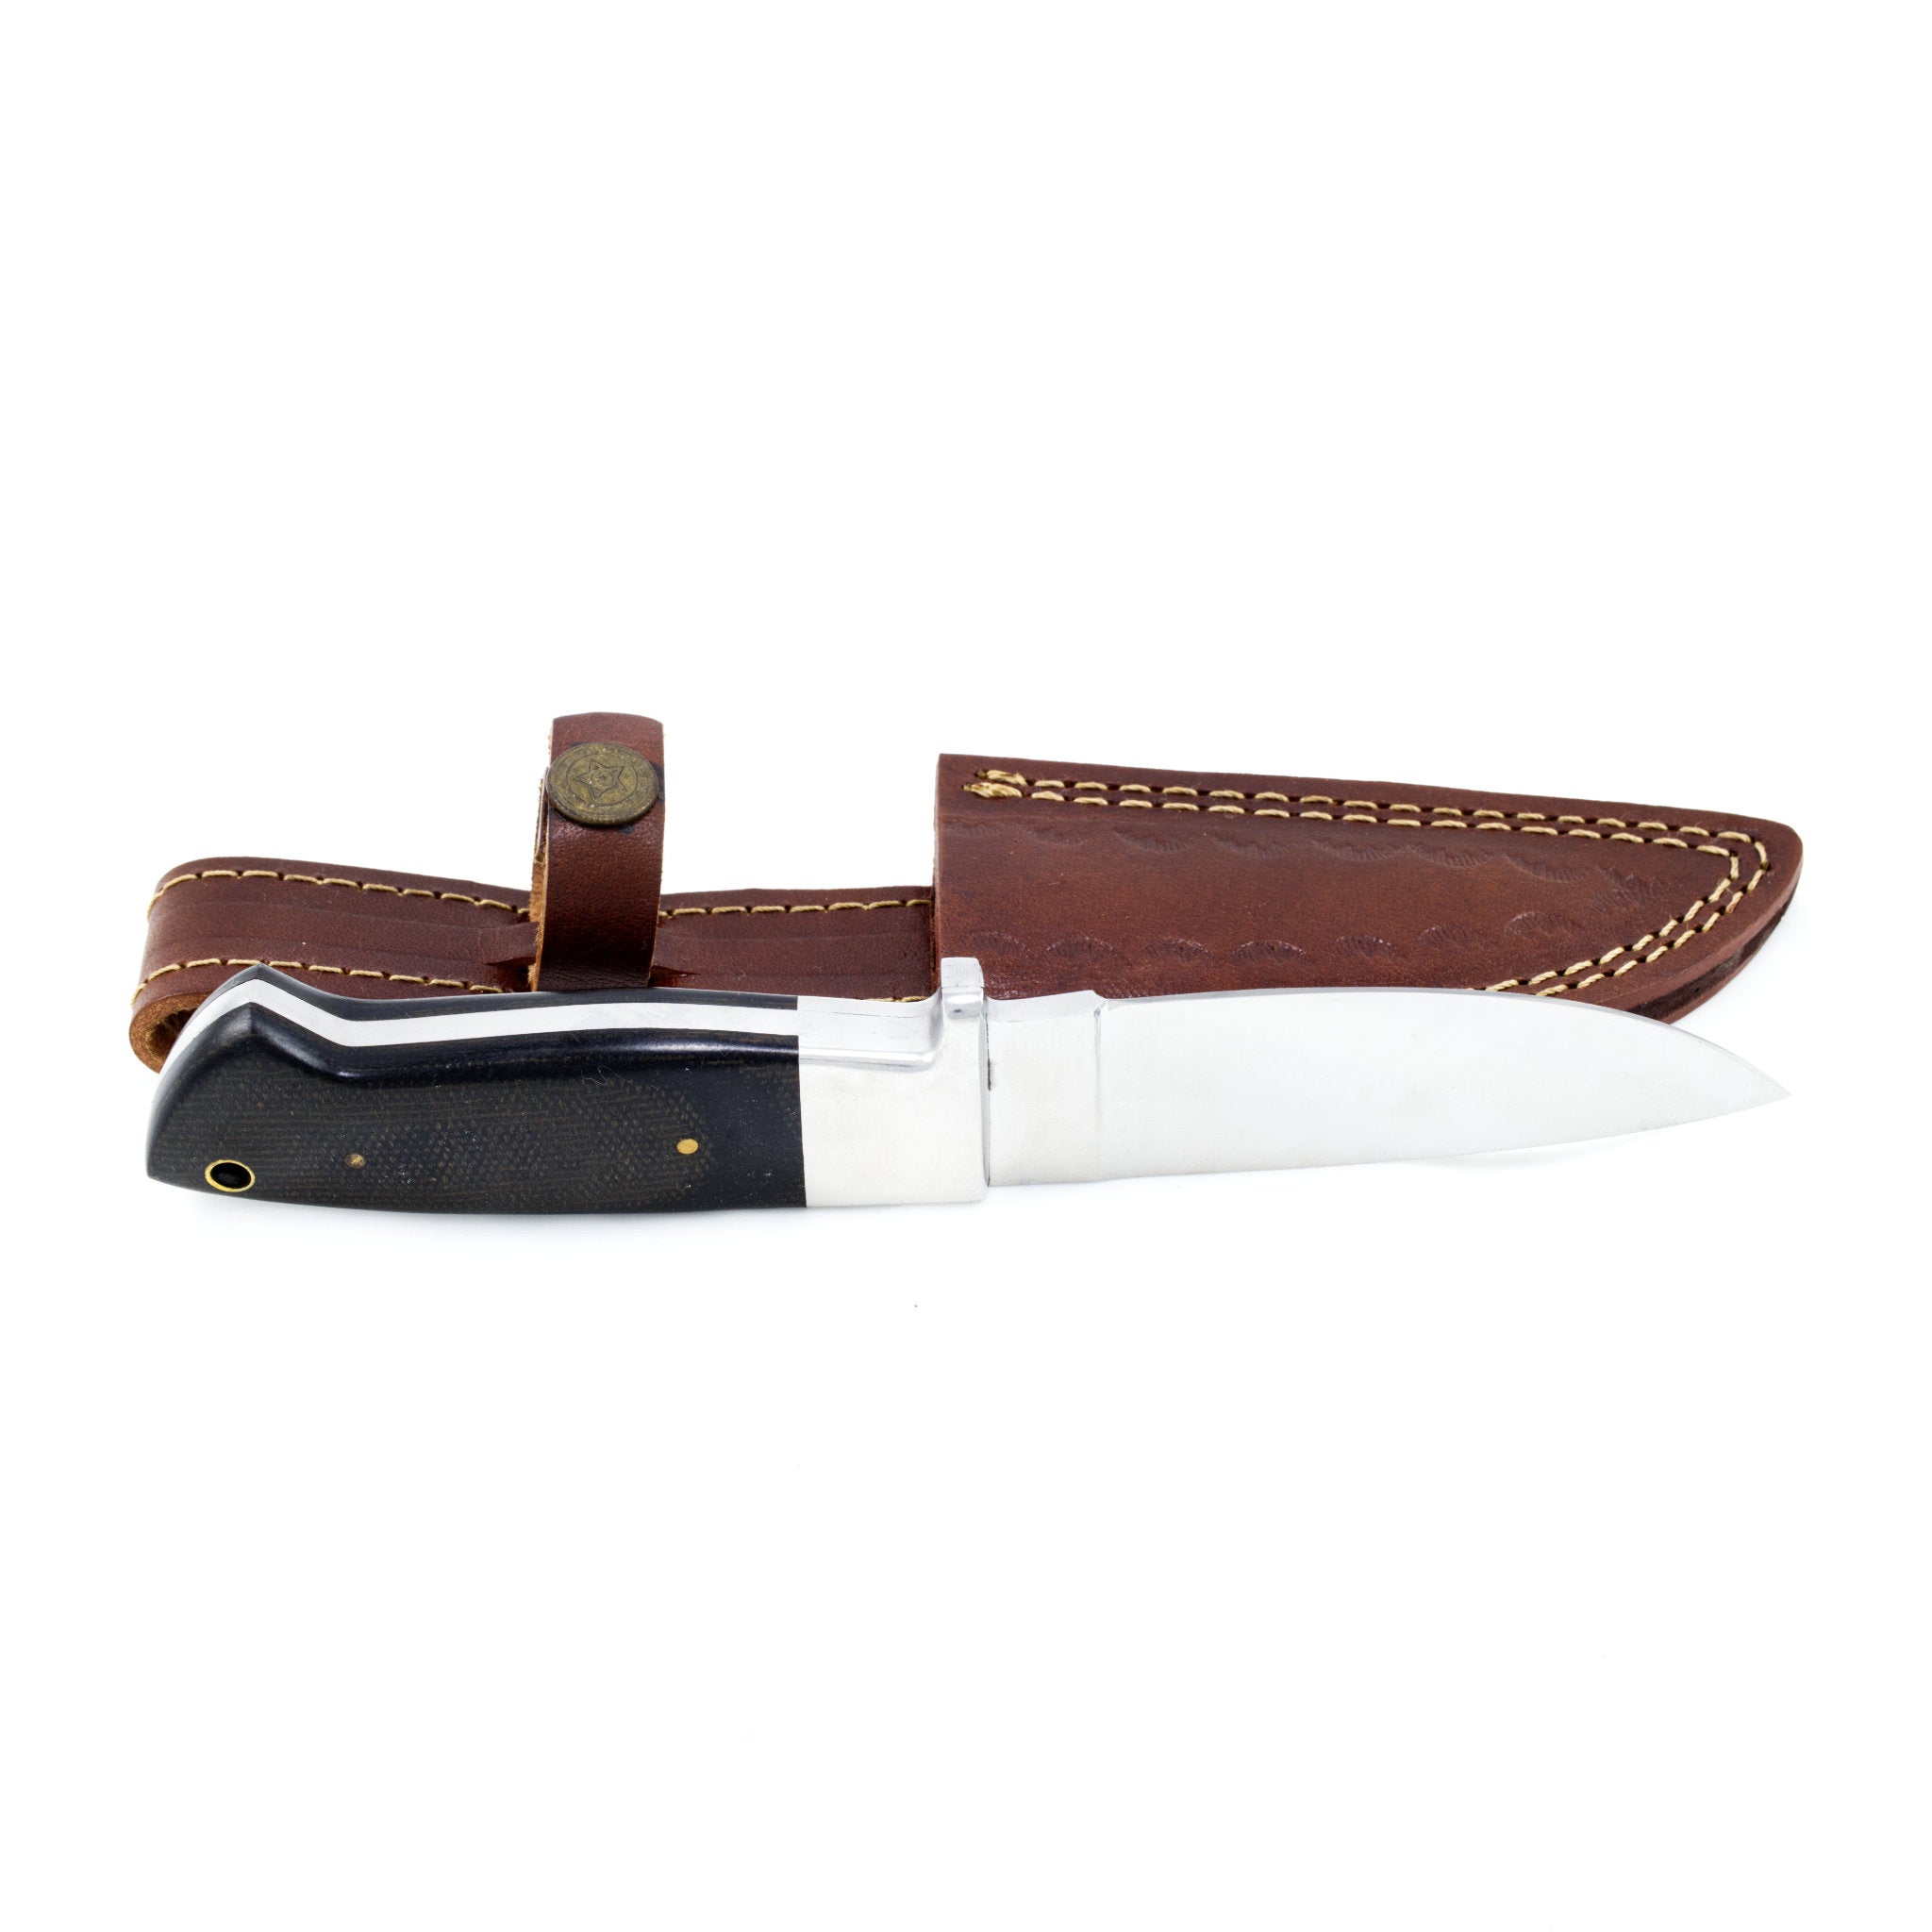 Camp Crony Handmade Hunting Knife Stainless Steel Blade Micarta Handle